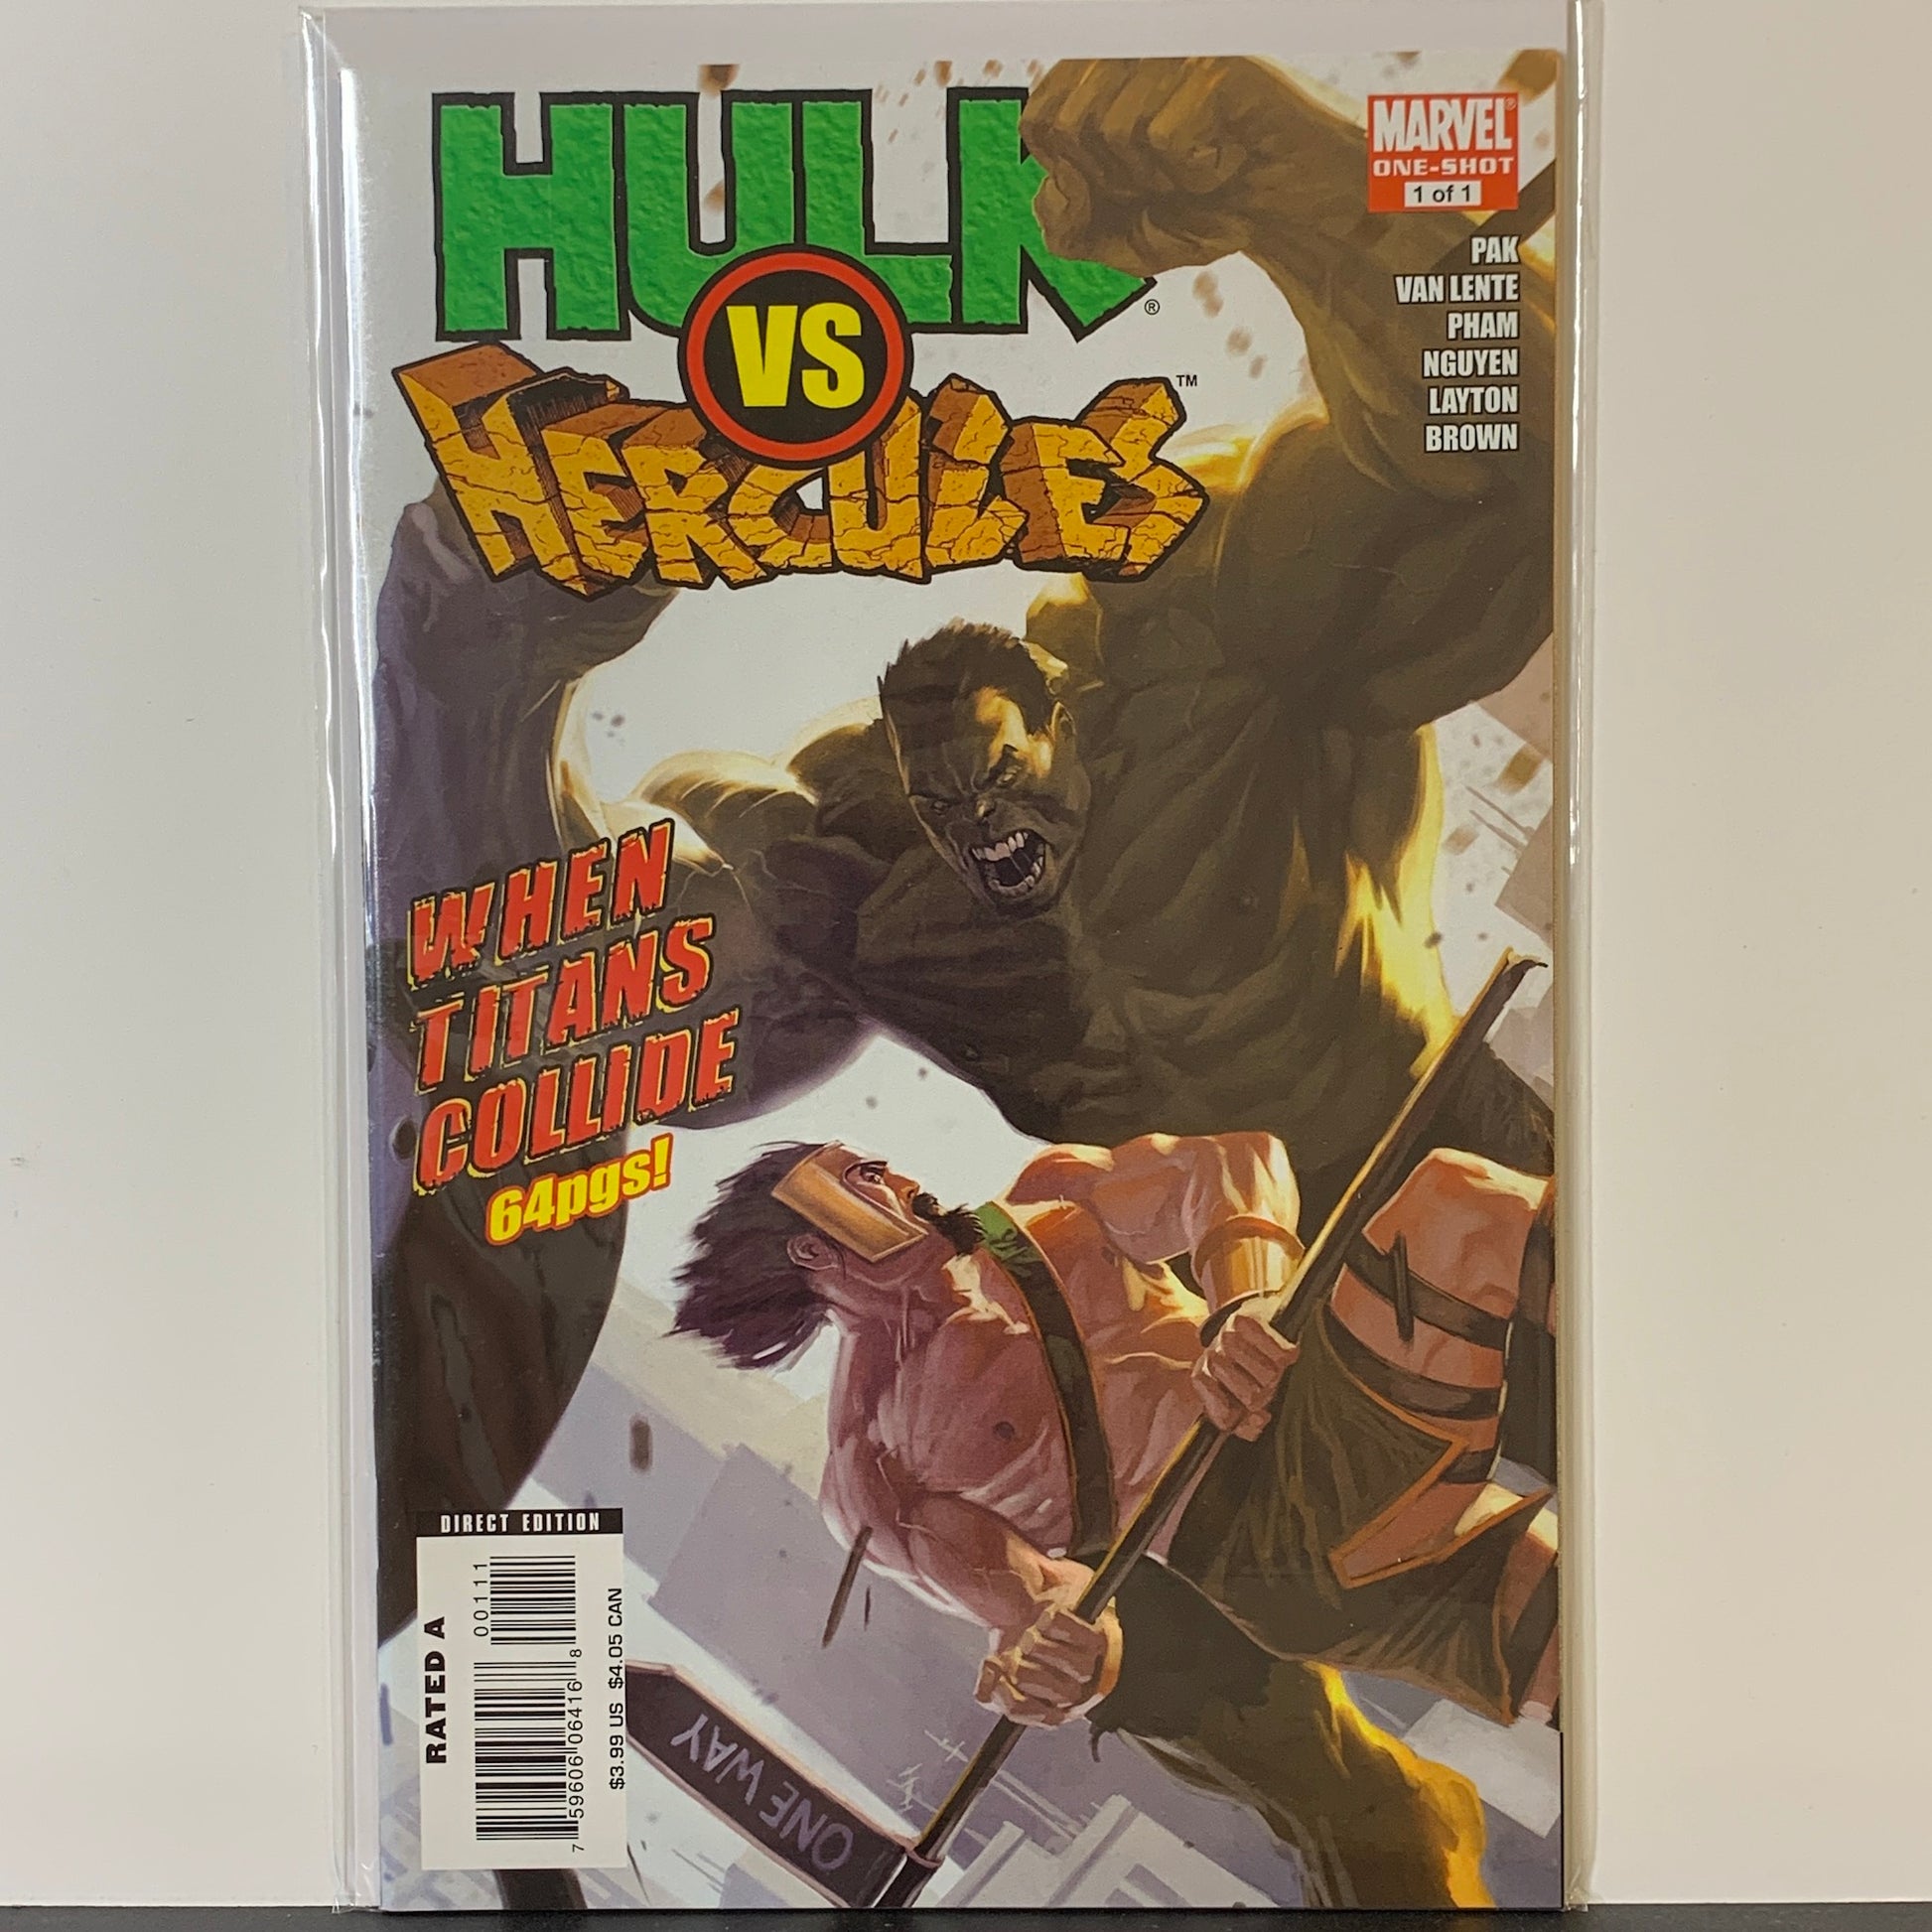 Hulk vs. Hercules: When Titans Collide (2008) #1 (VF)